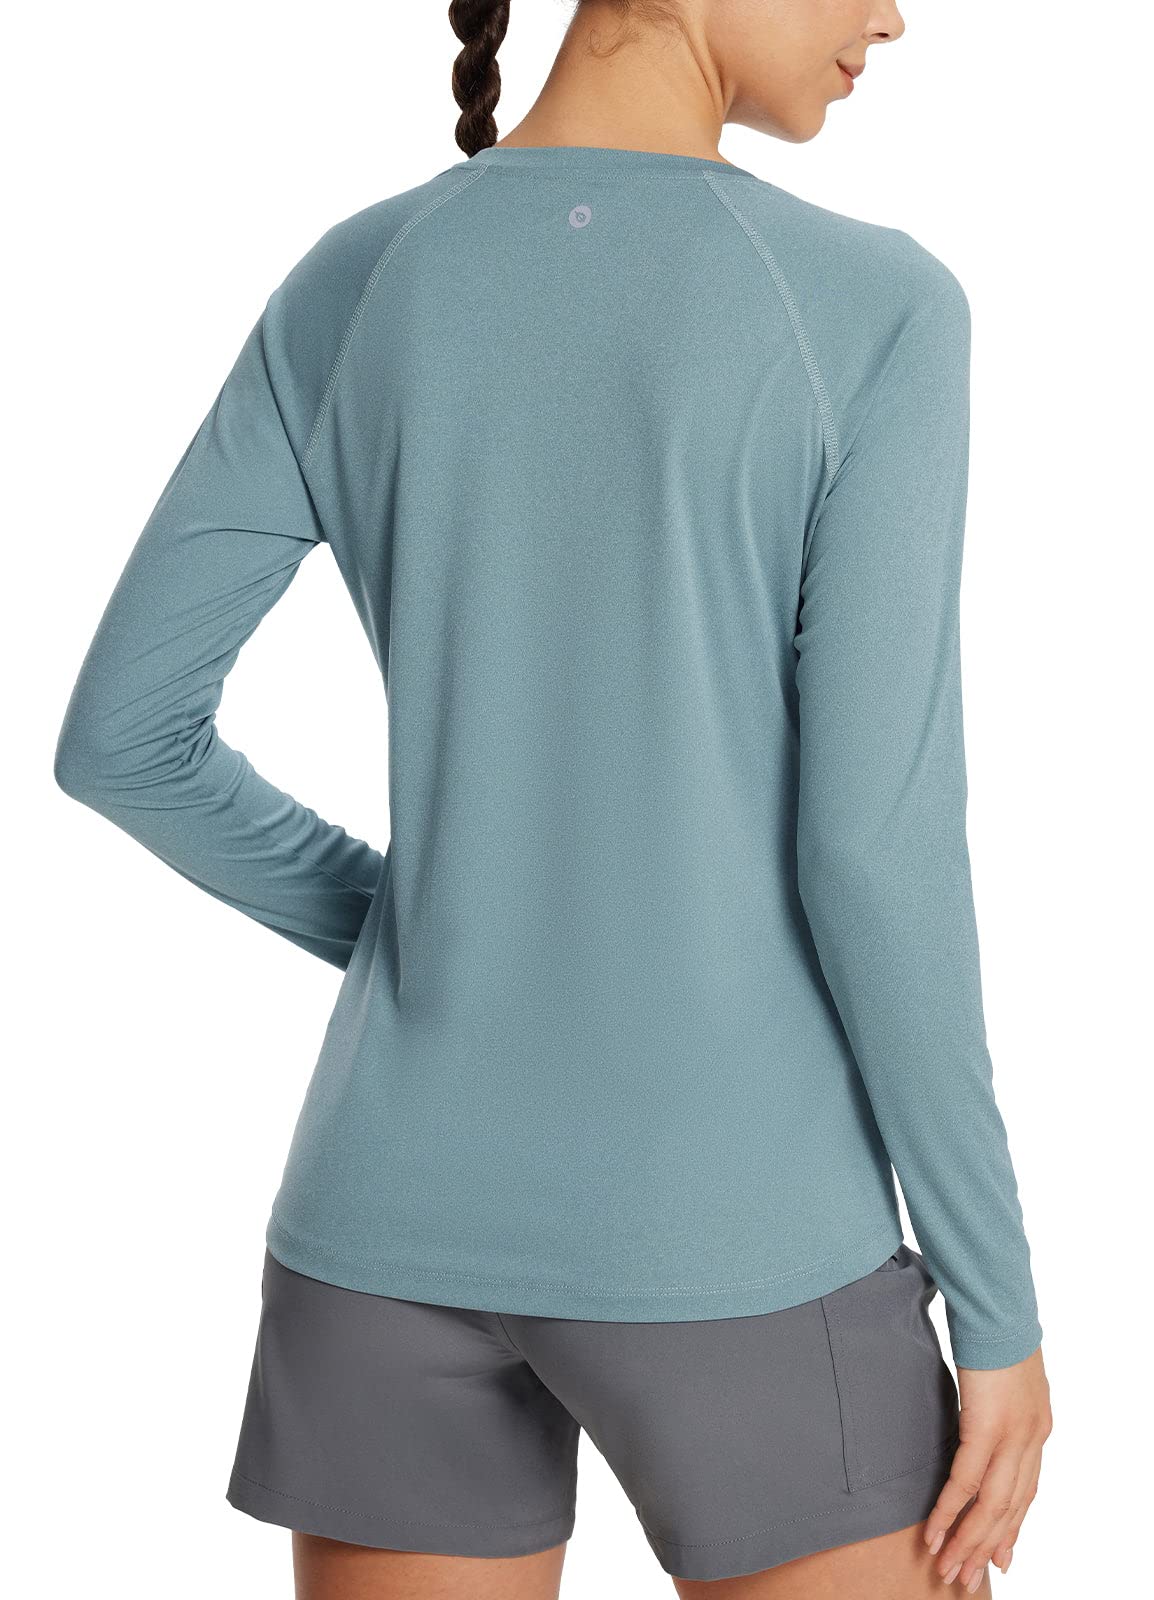 BALEAF Women's UPF 50+ Sun Shirts Long Sleeve UV Protection Rash Guard Lightweight Quick Dry SPF Hiking Tops Outdoor